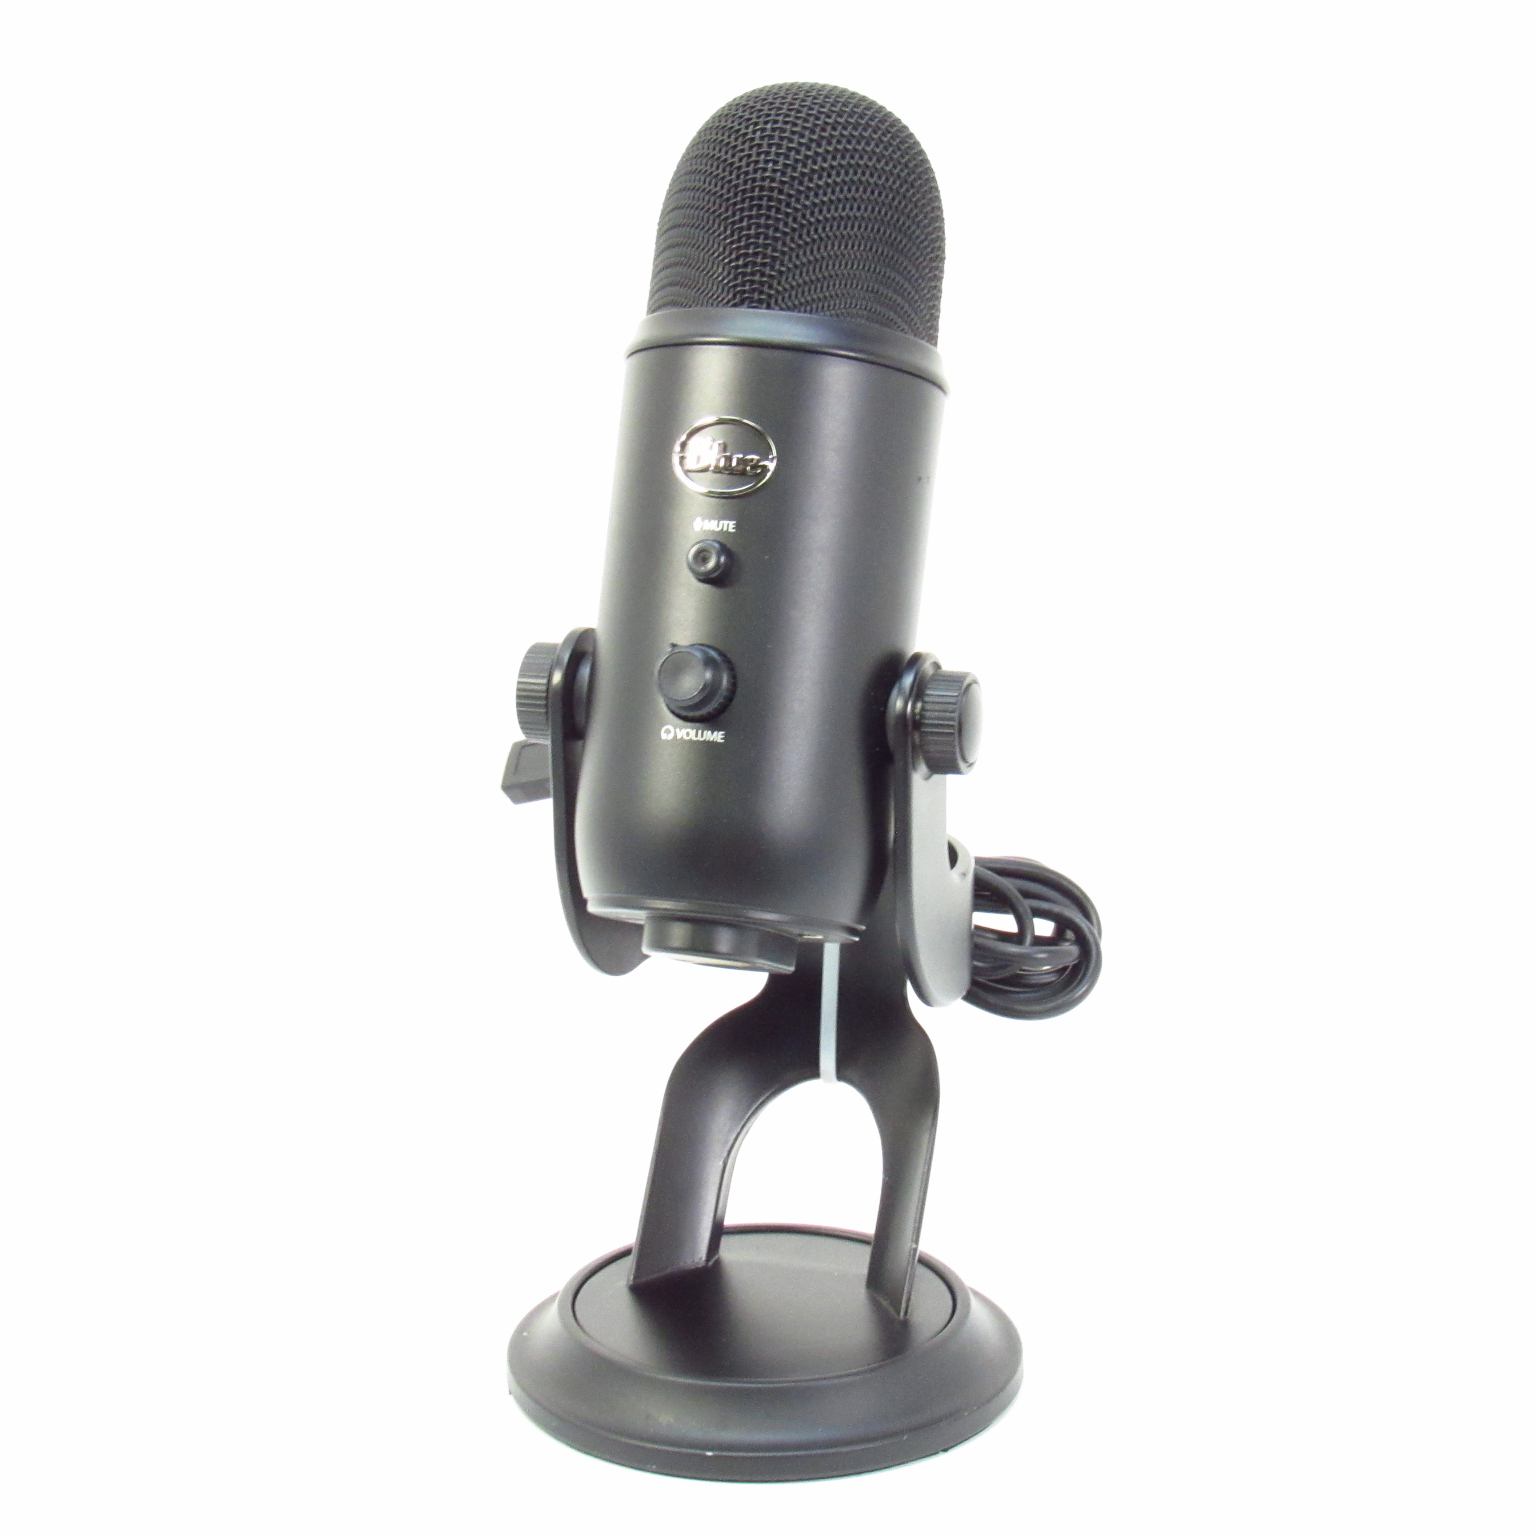 BLUE Yeti USB Condenser Microphone - Black